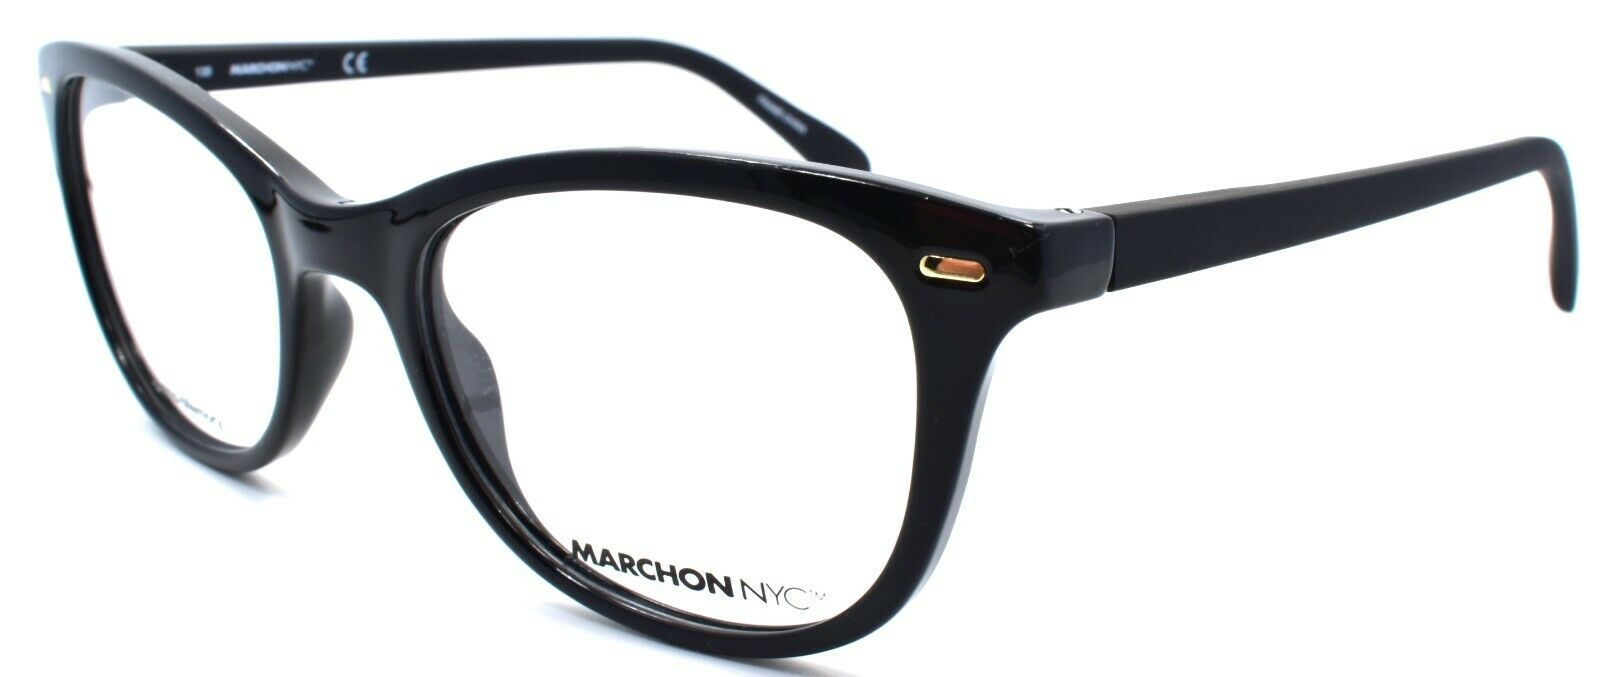 1-Marchon M5803 001 Women's Eyeglasses Frames 51-19-135 Black-886895416283-IKSpecs